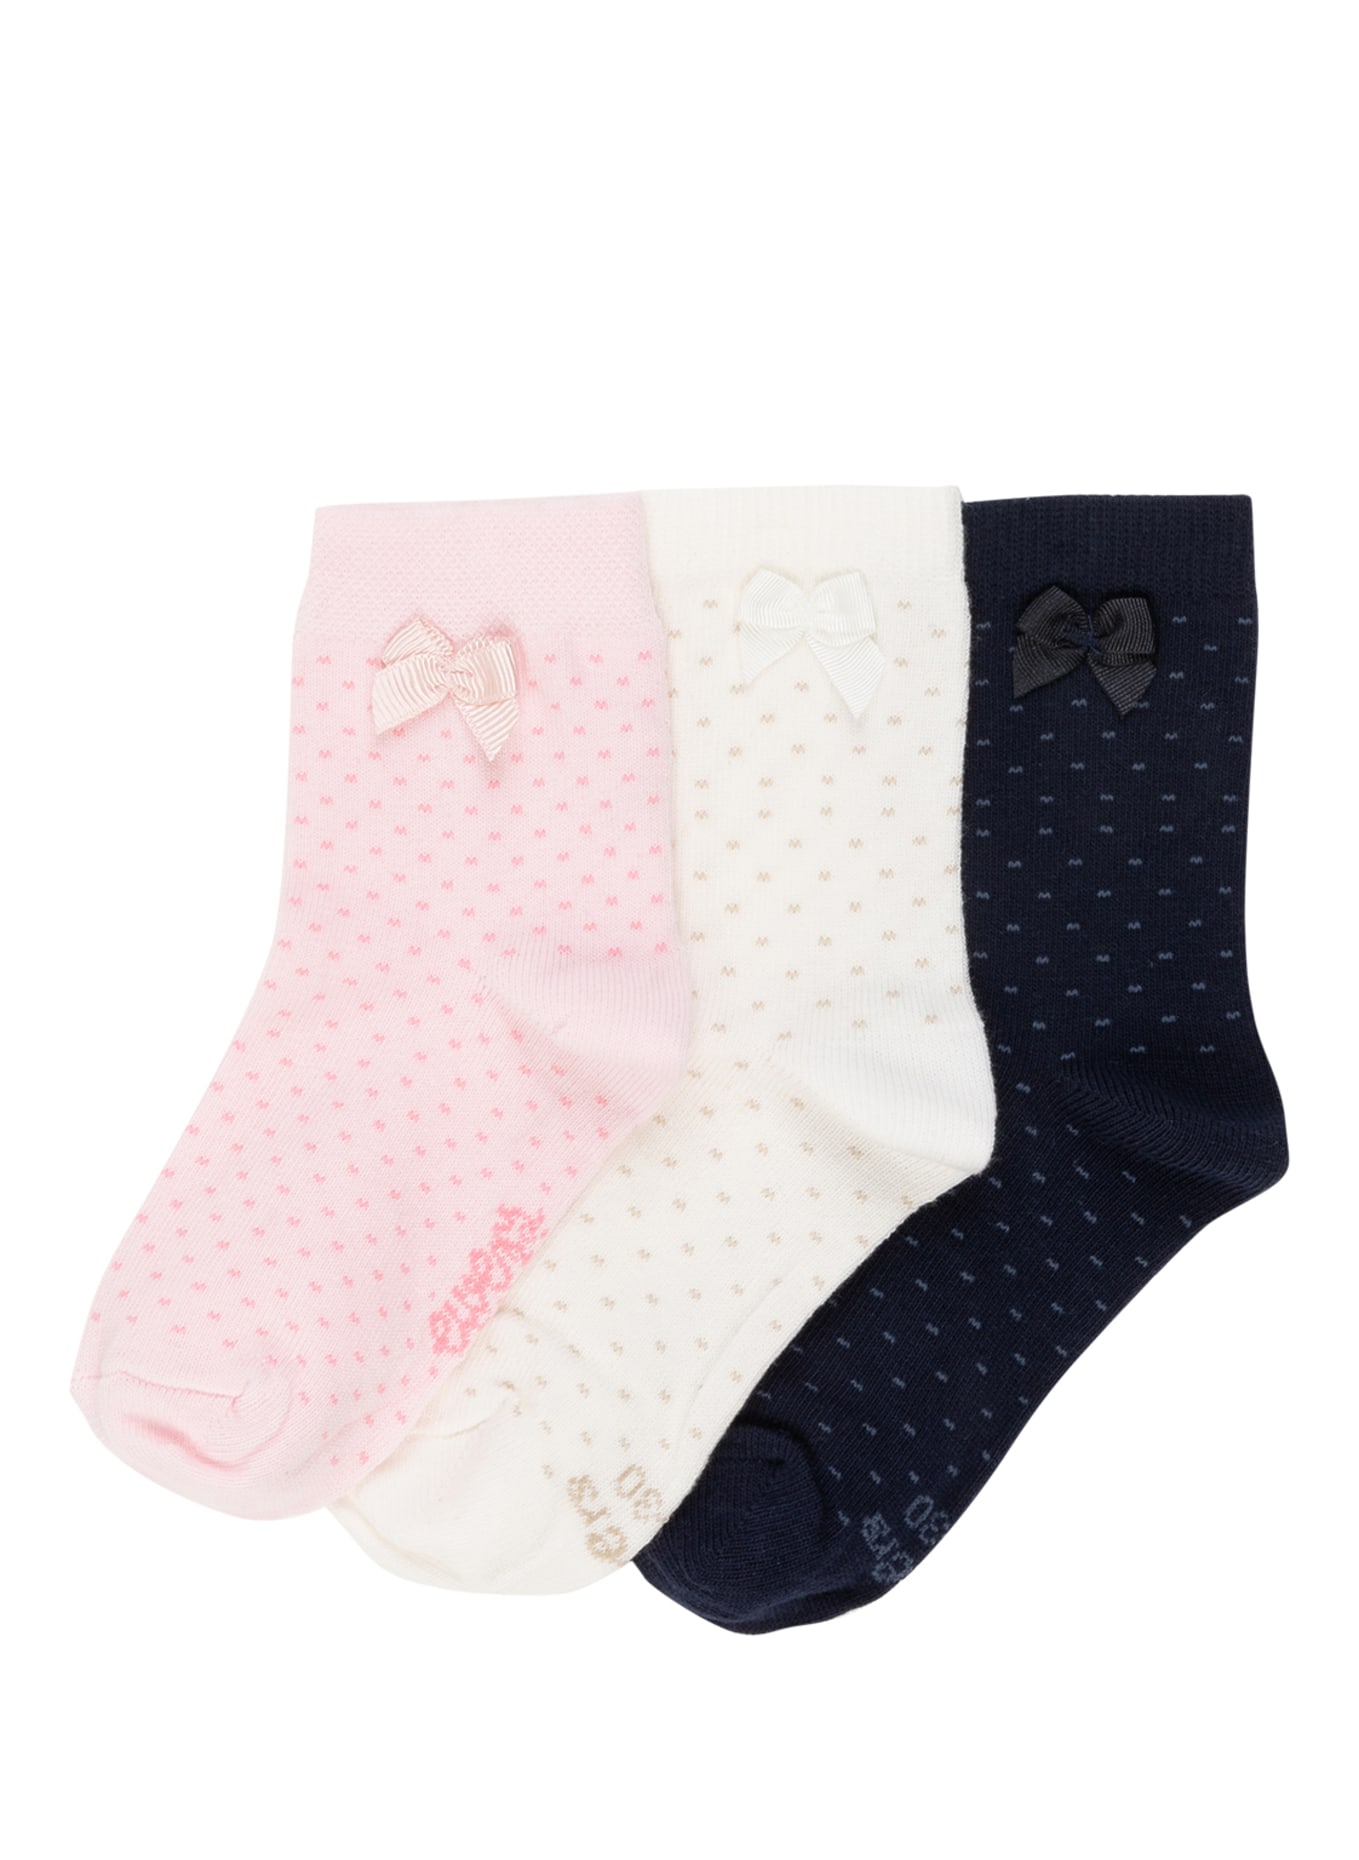 ewers COLLECTION 3er-Pack Socken, Farbe: 8010 8010 latte, baby-rose, navy (Bild 1)